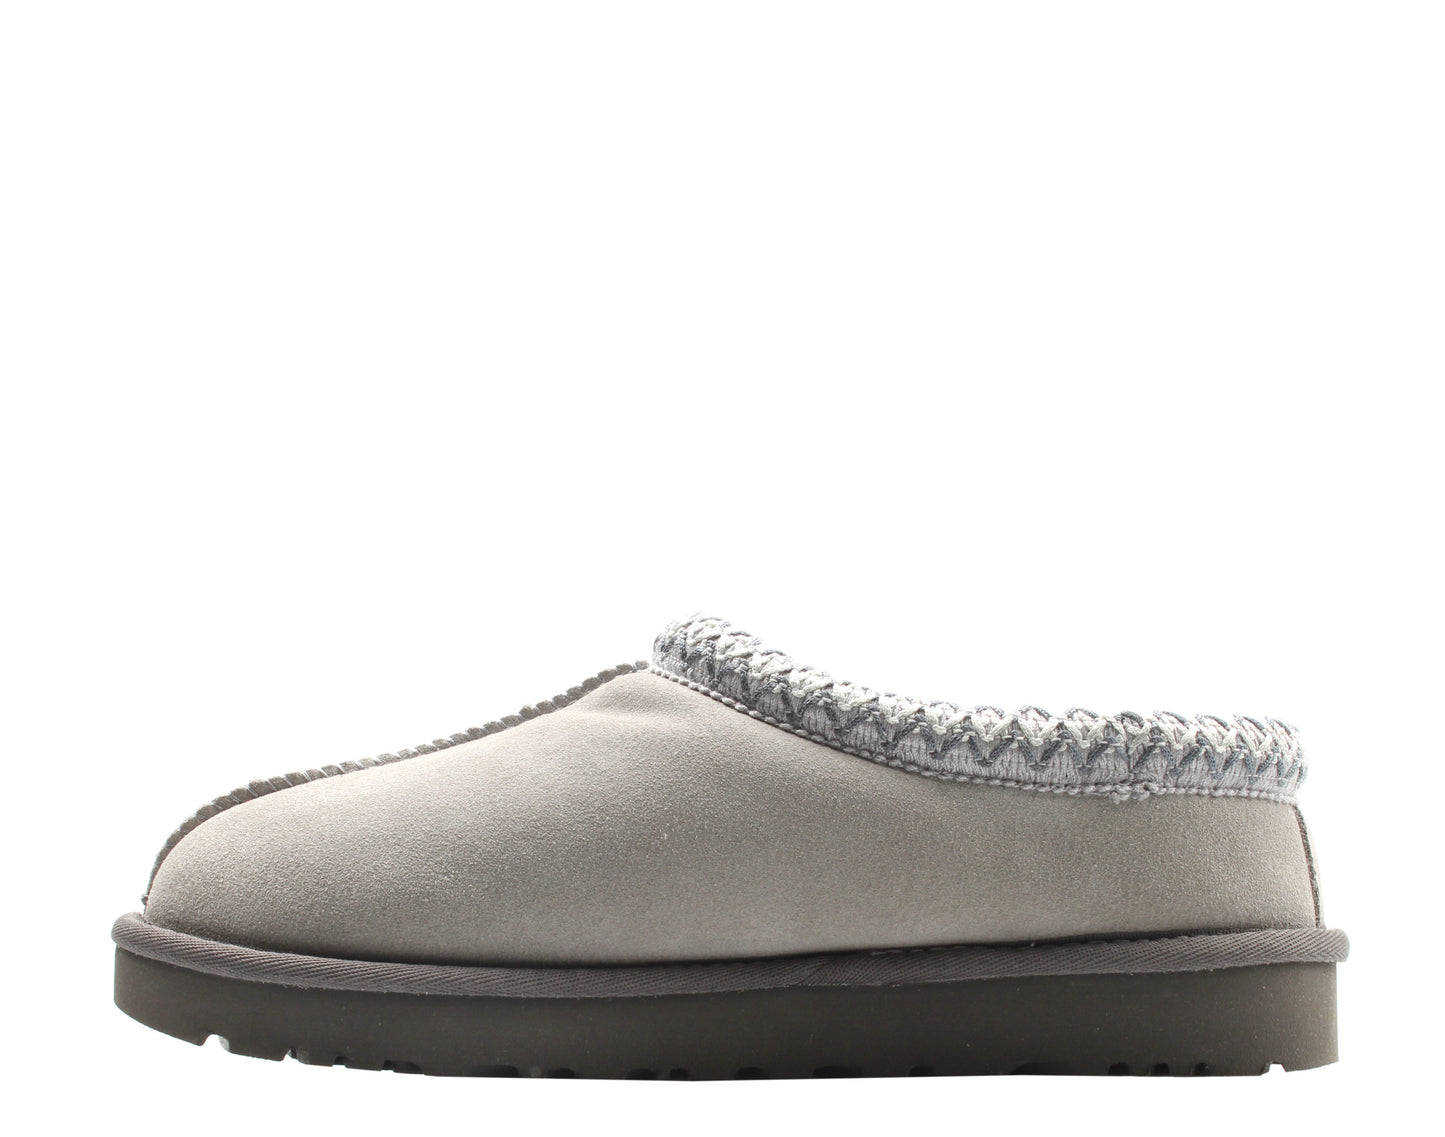 UGG Australia Tasman Seal Grey Women's Shoes 5955-SEL